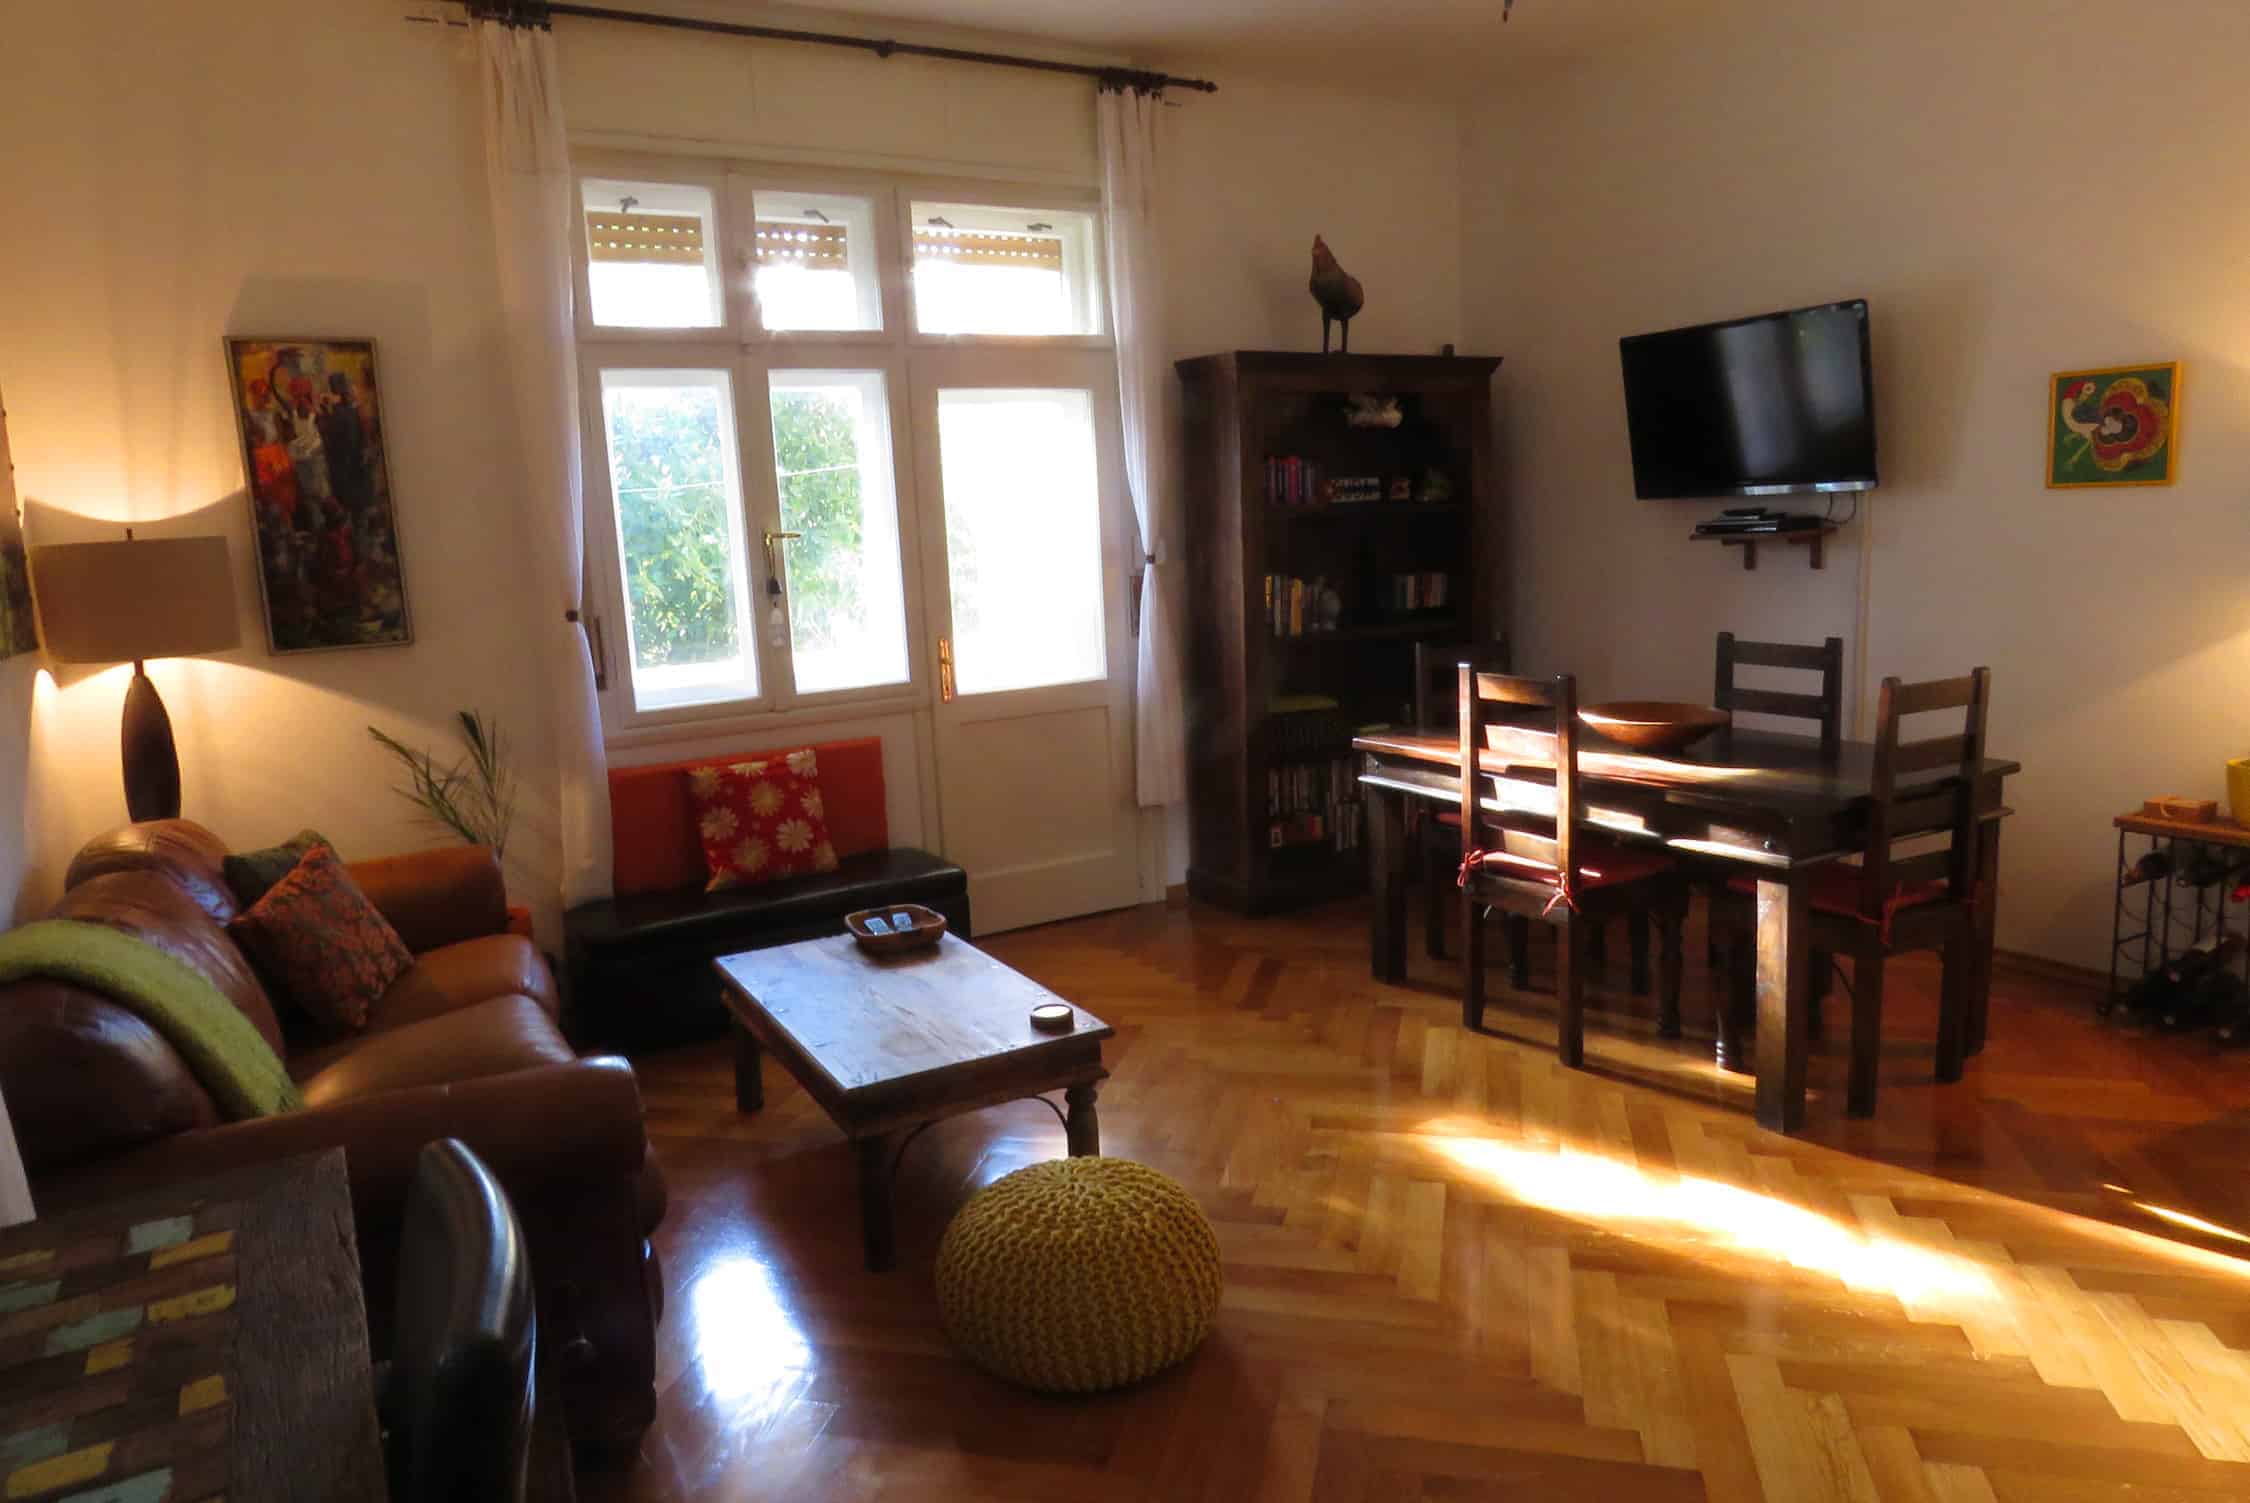 Our apartment in Split